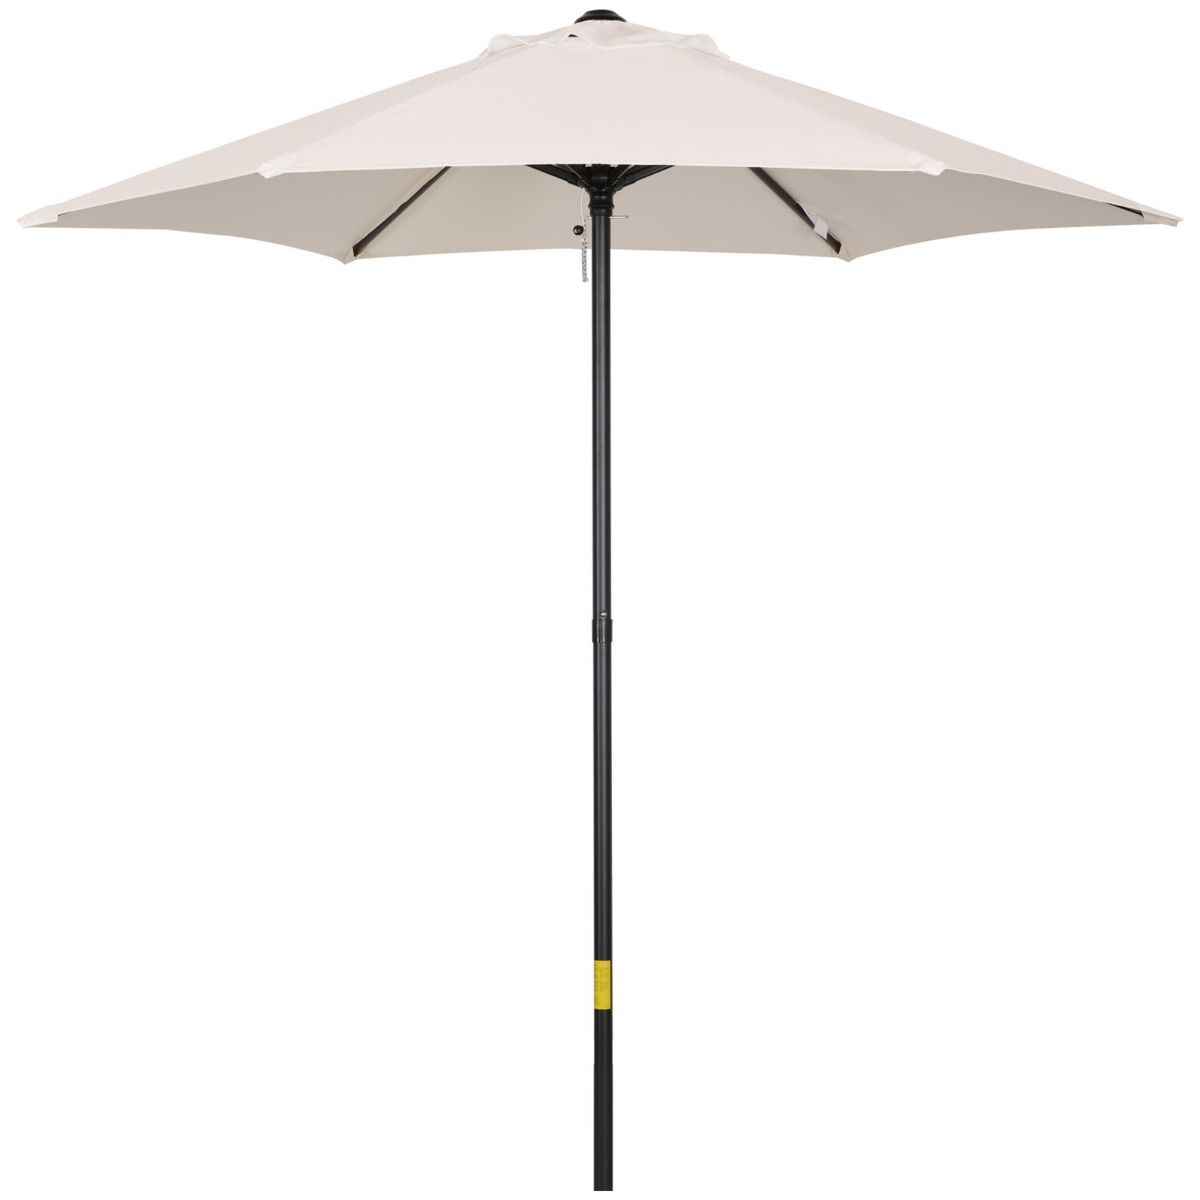 Outsunny Patio Parasol Umbrella, Cream - 1.96m